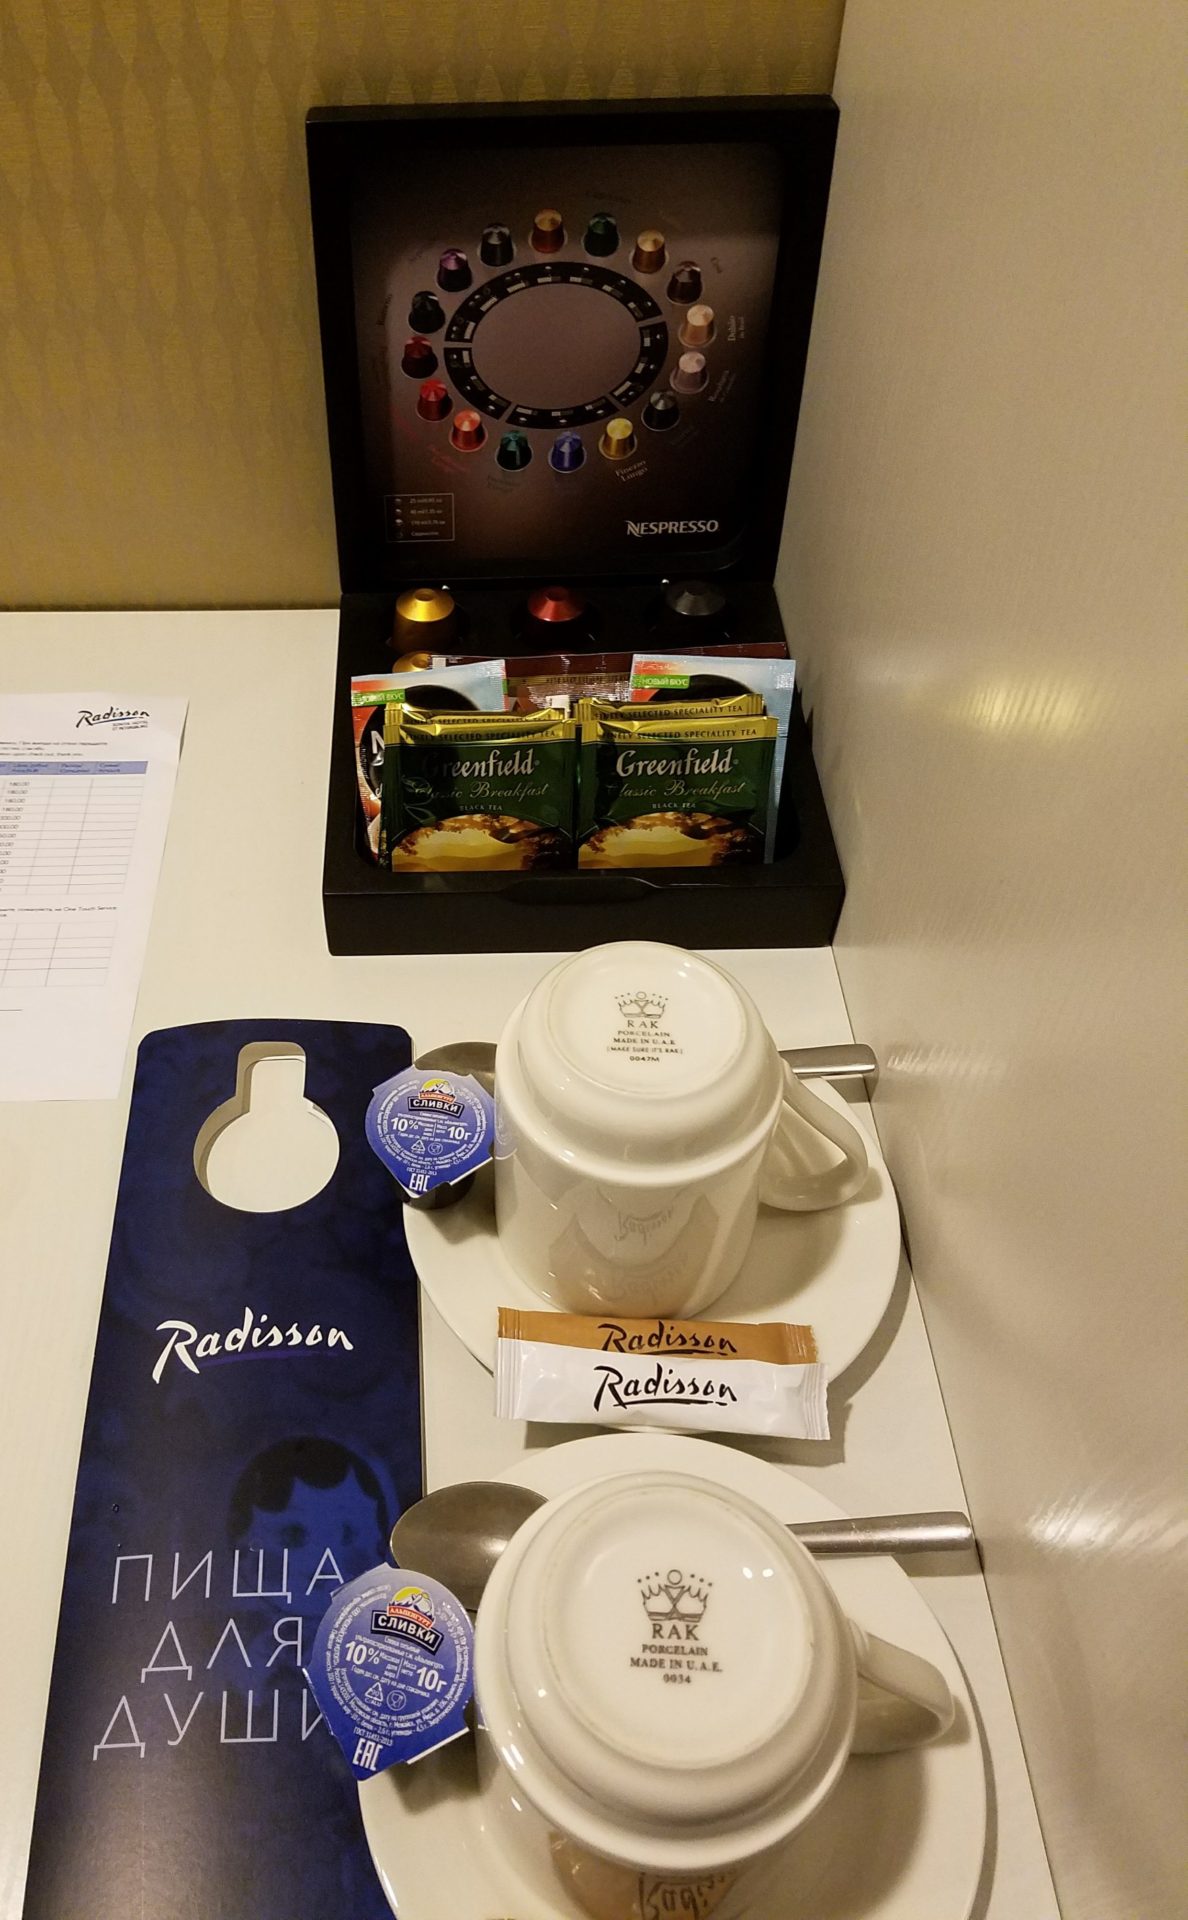 a coffee mug and tea bag on a plate